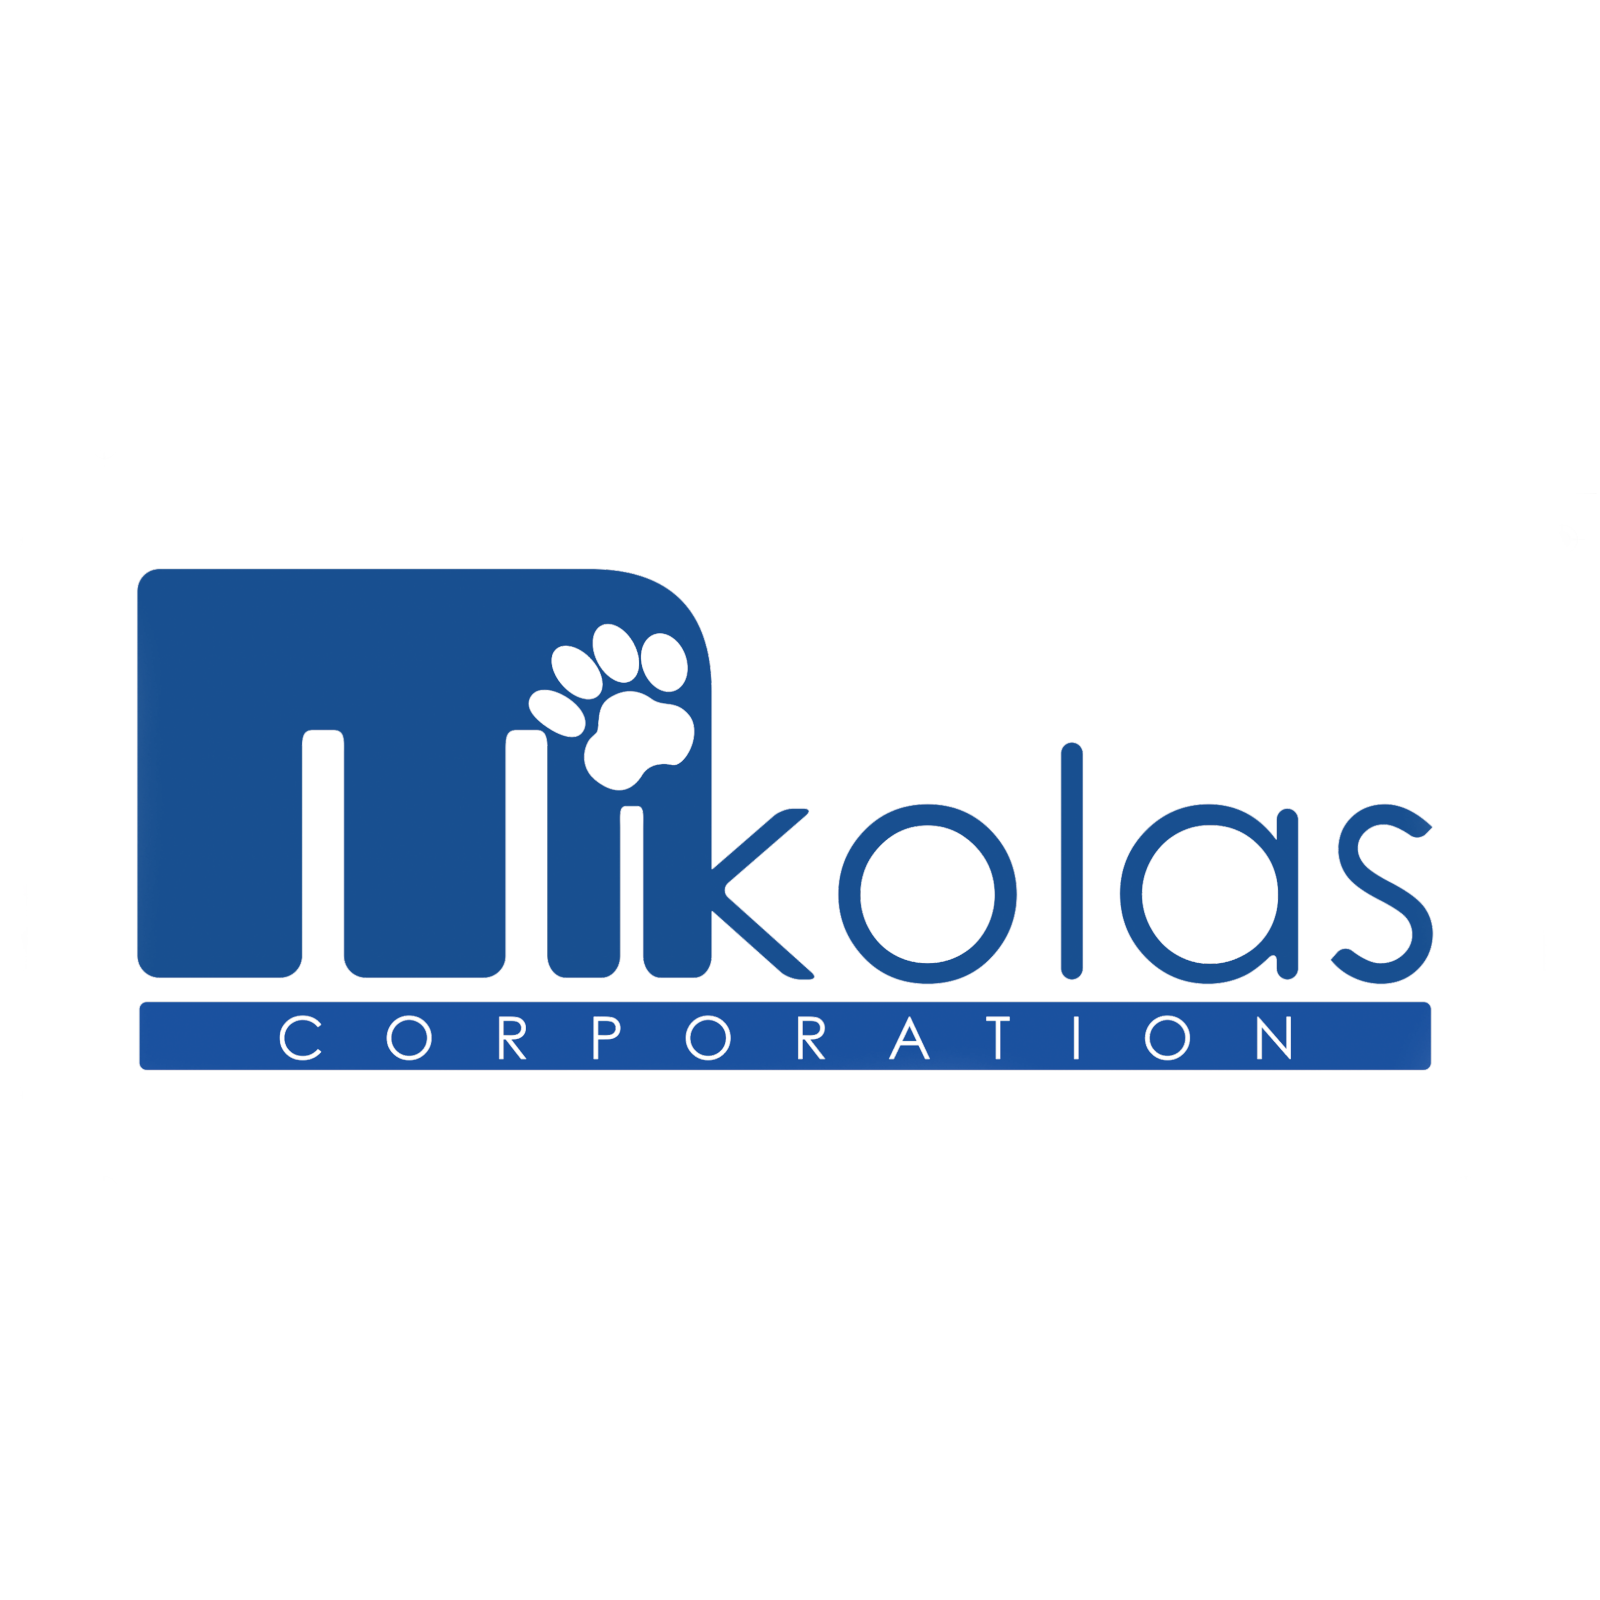 Mikolas Corporation